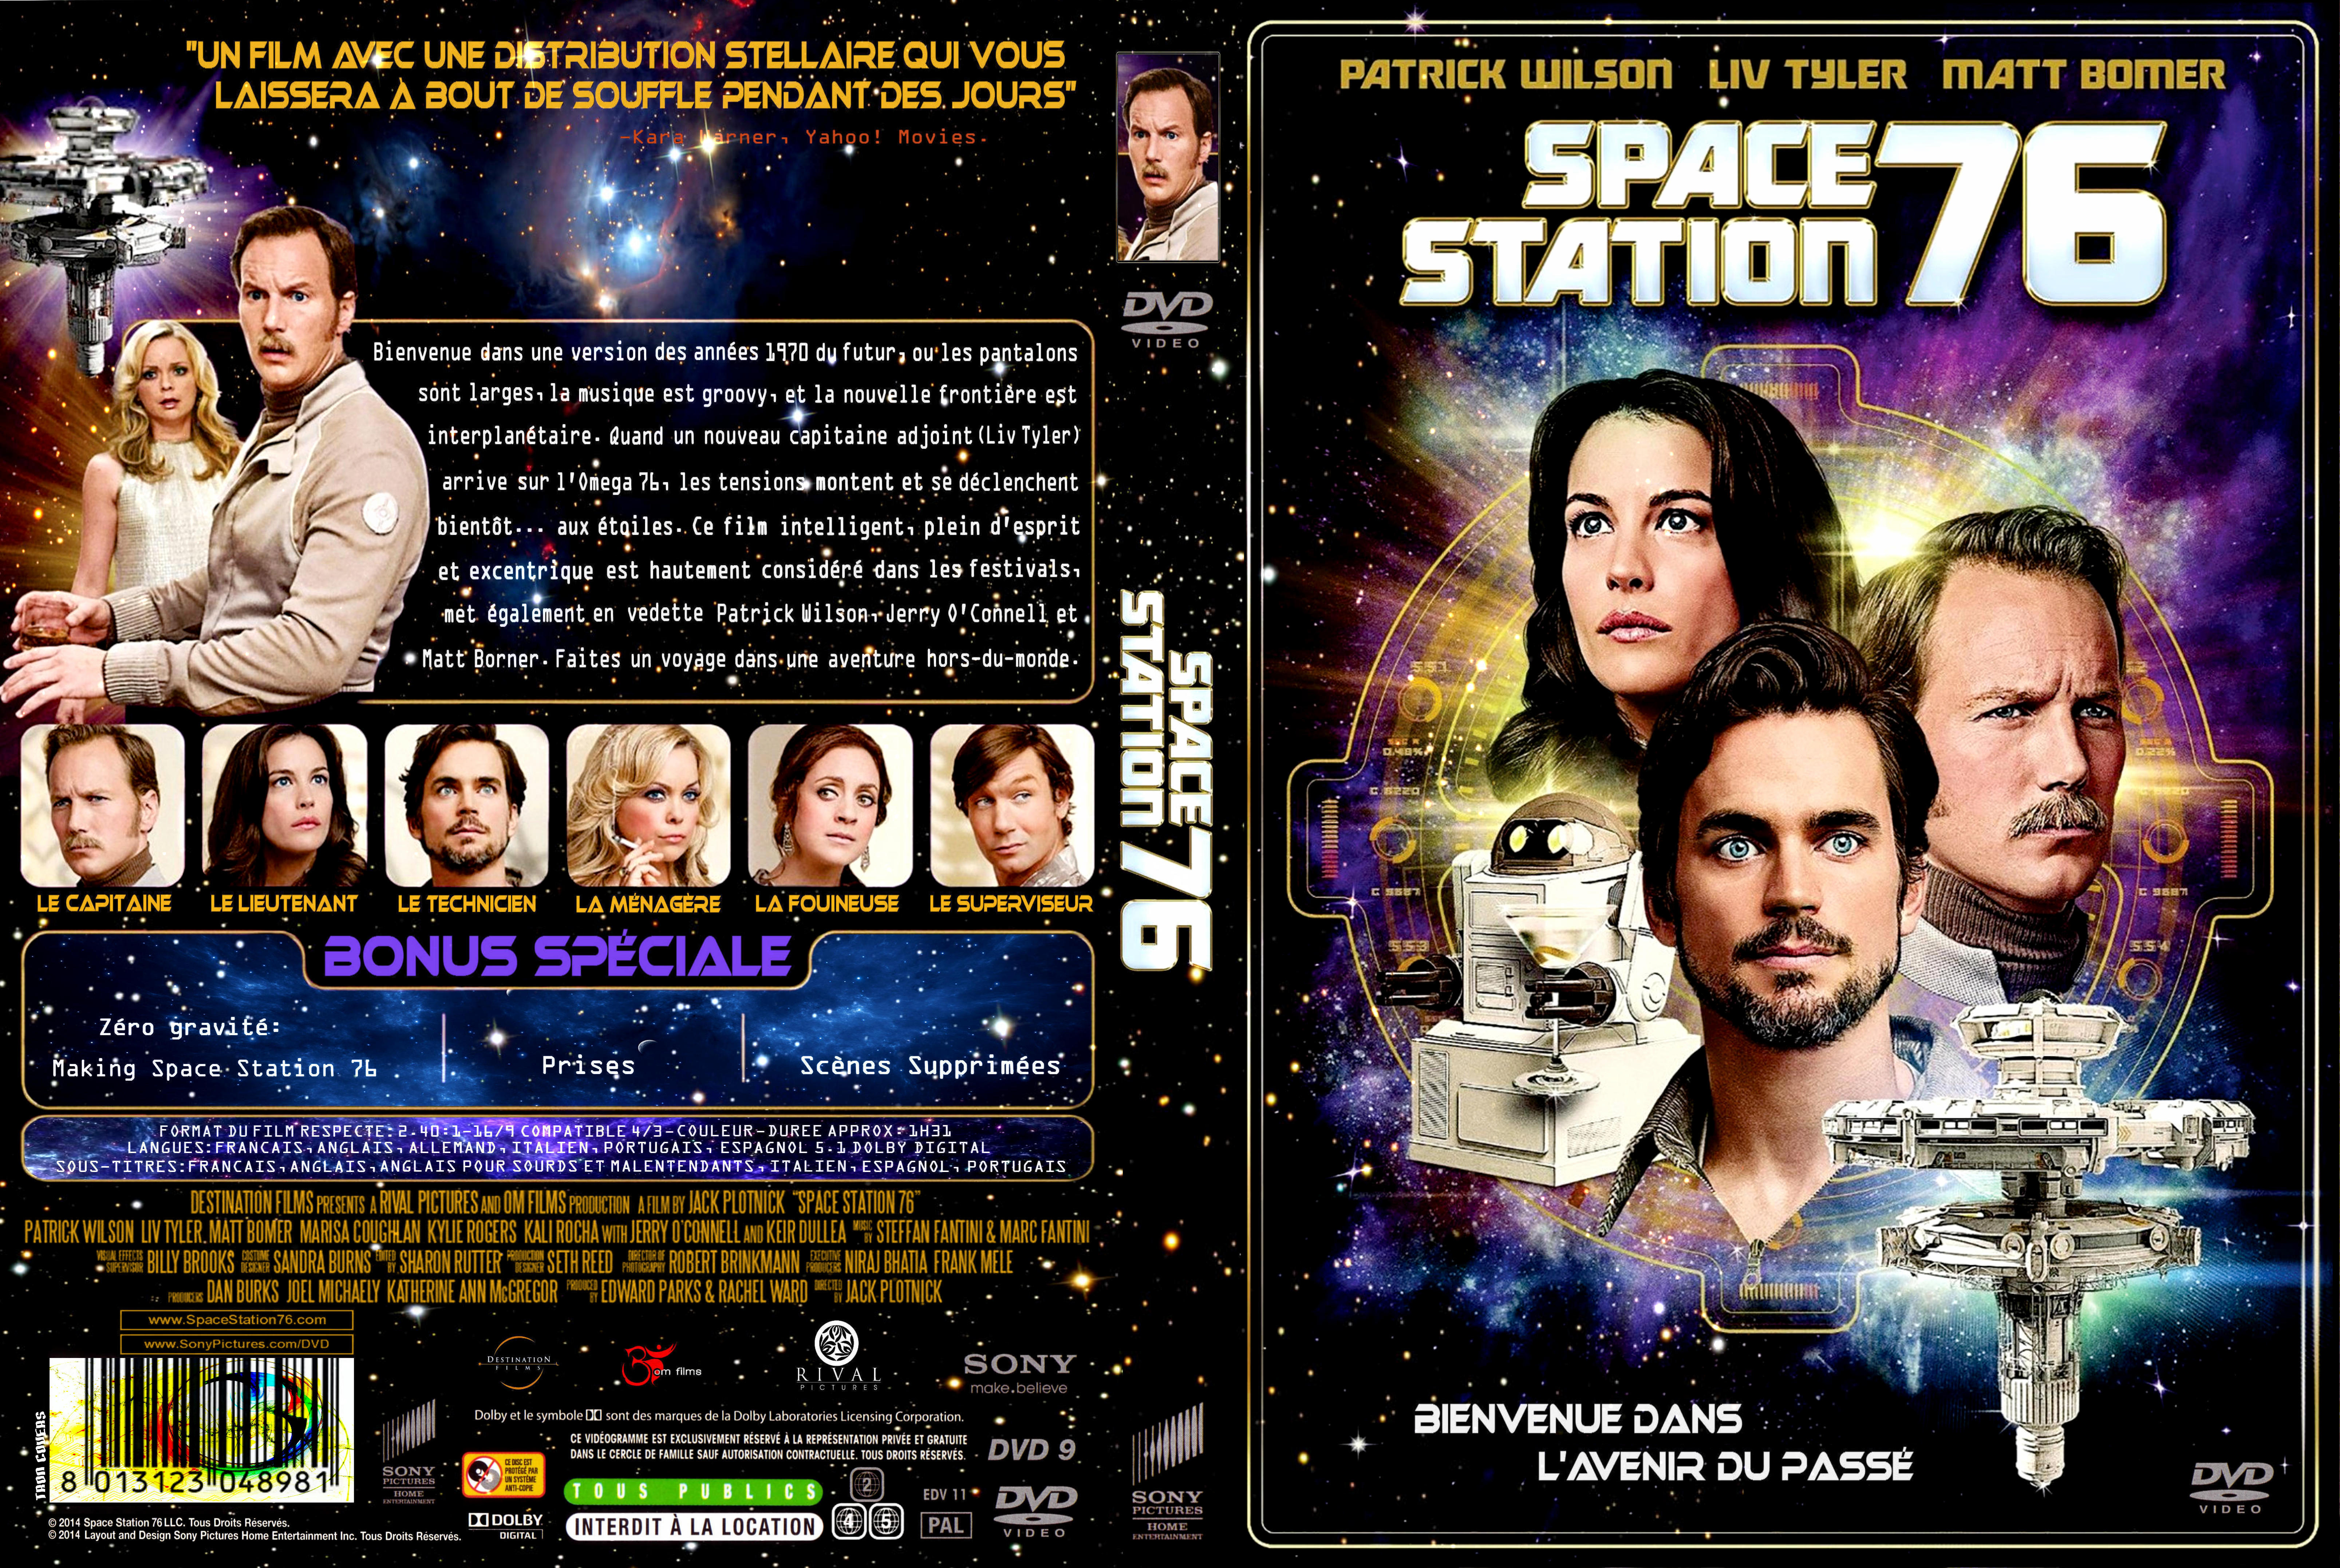 Jaquette DVD Space Station 76 custom v2